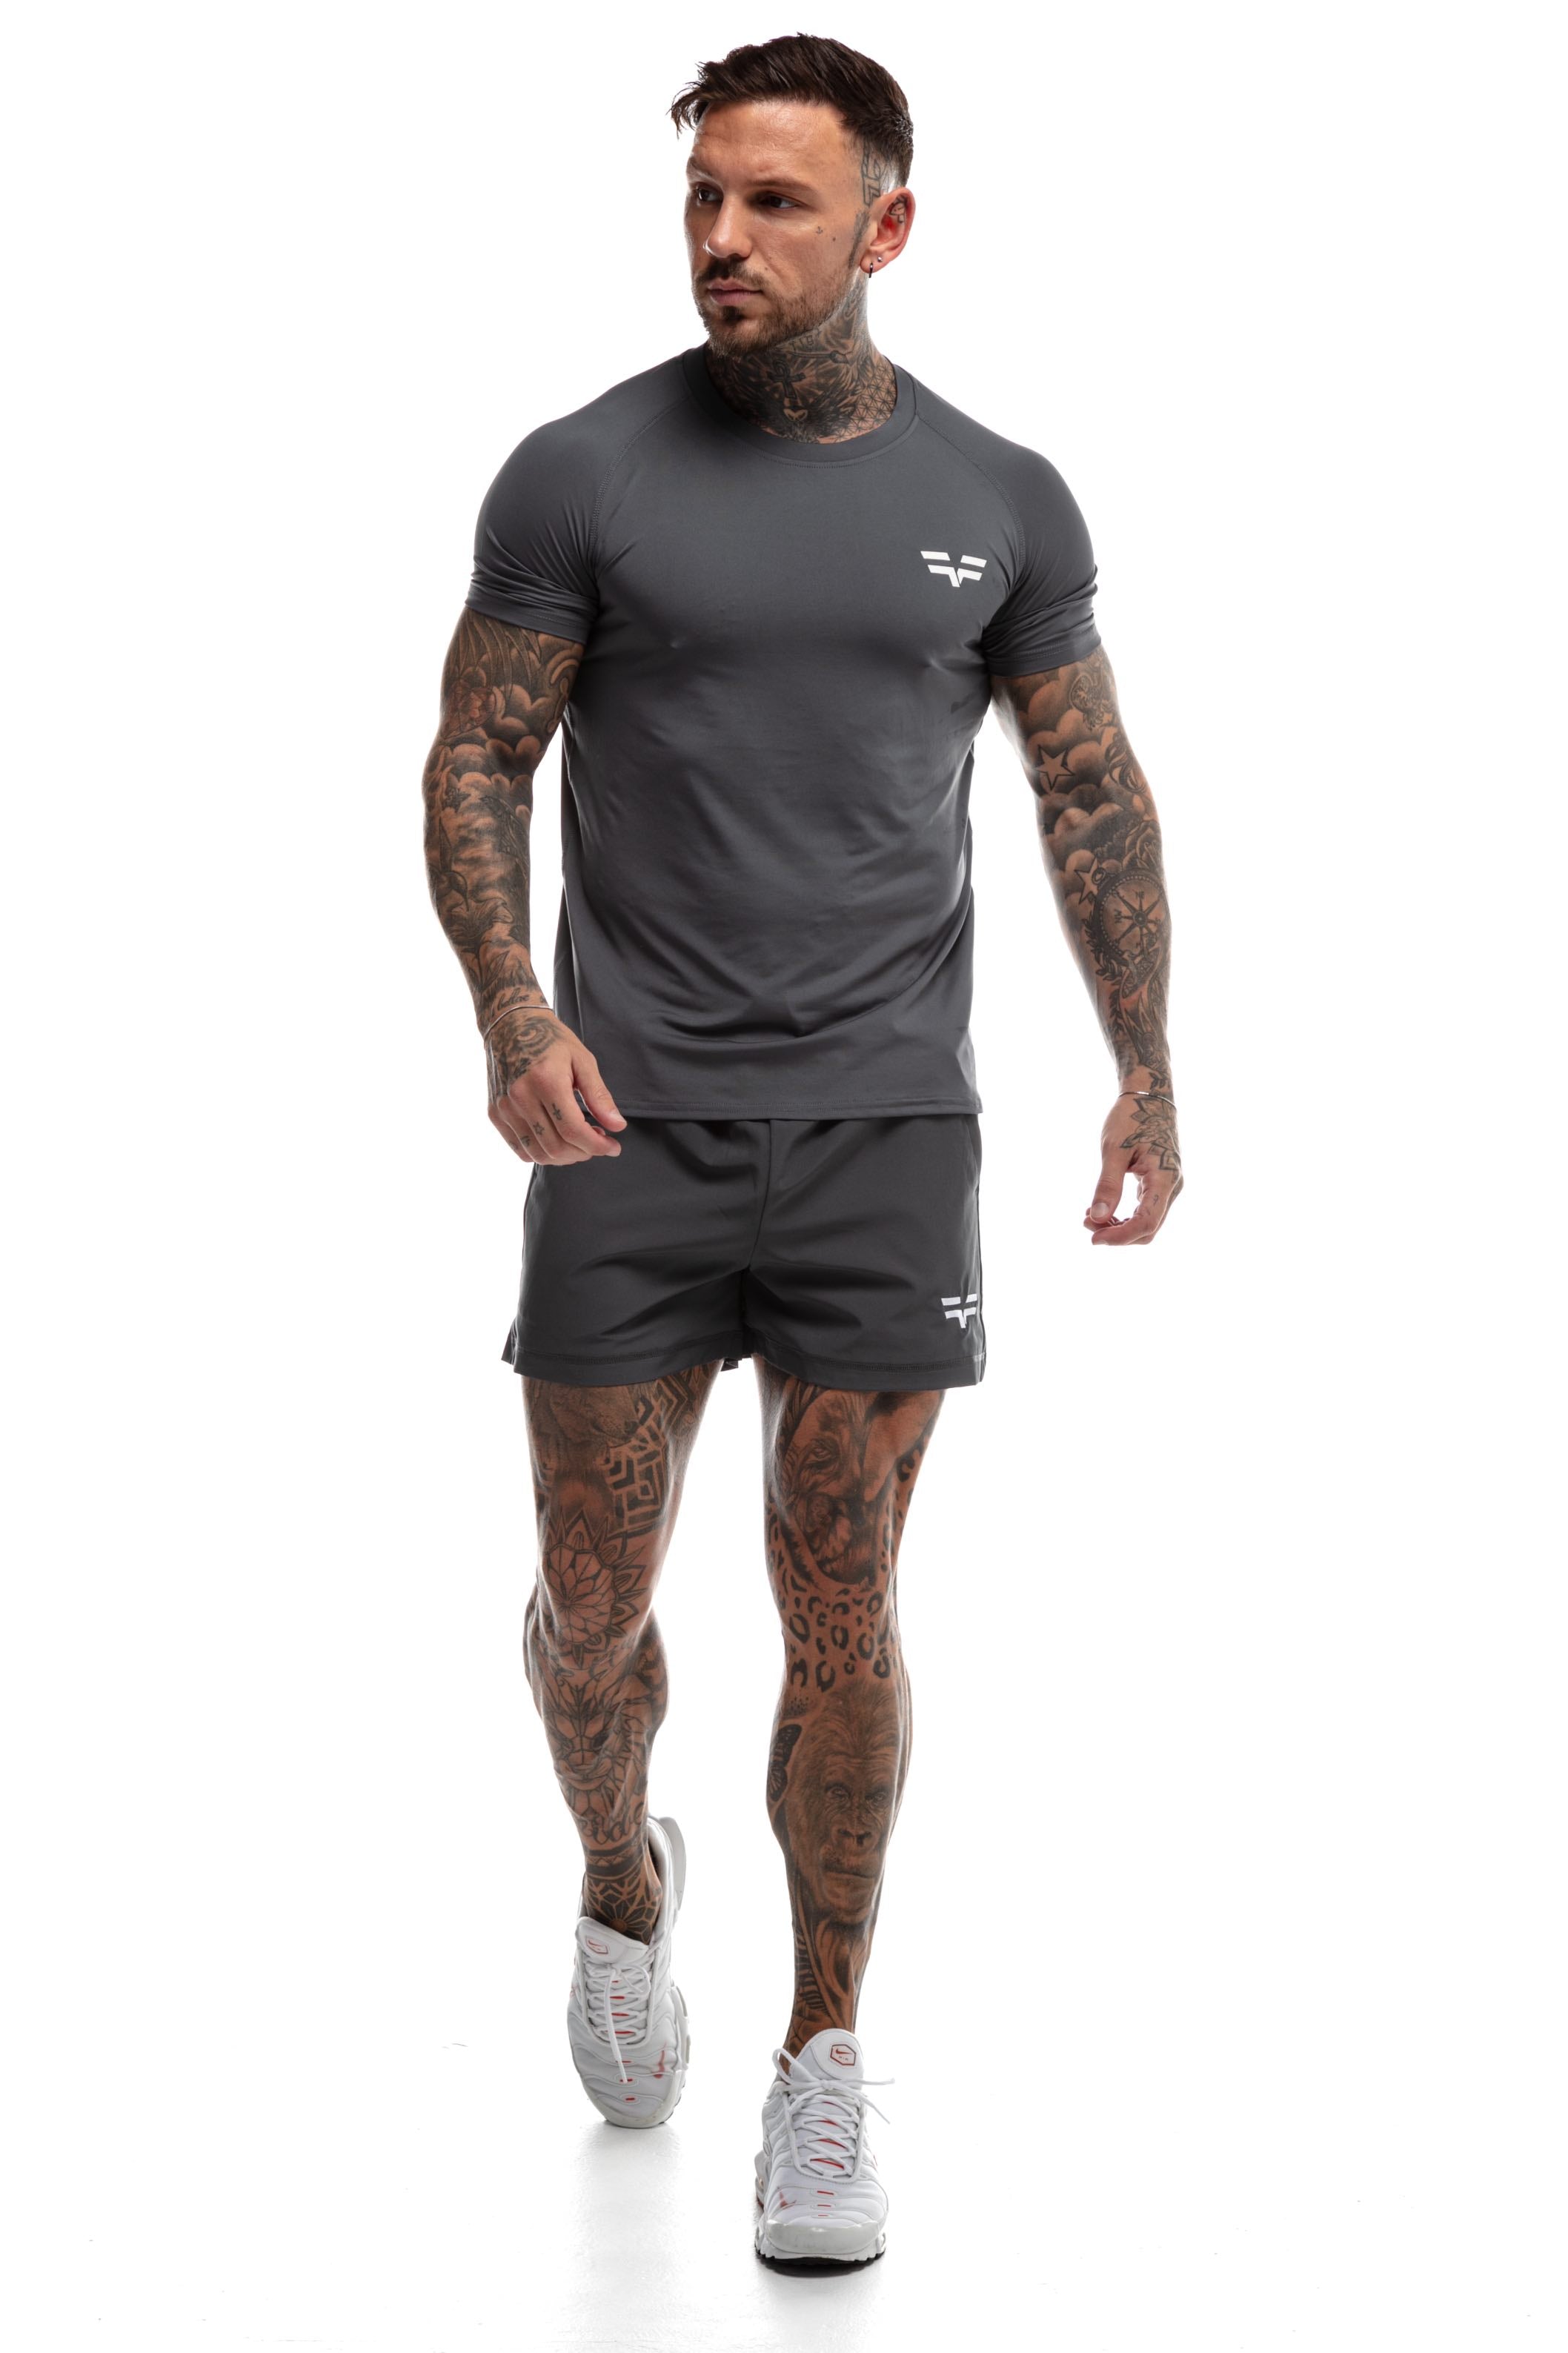 GymFreak Mens 365 Shorts - Charcoal - 3.5inch